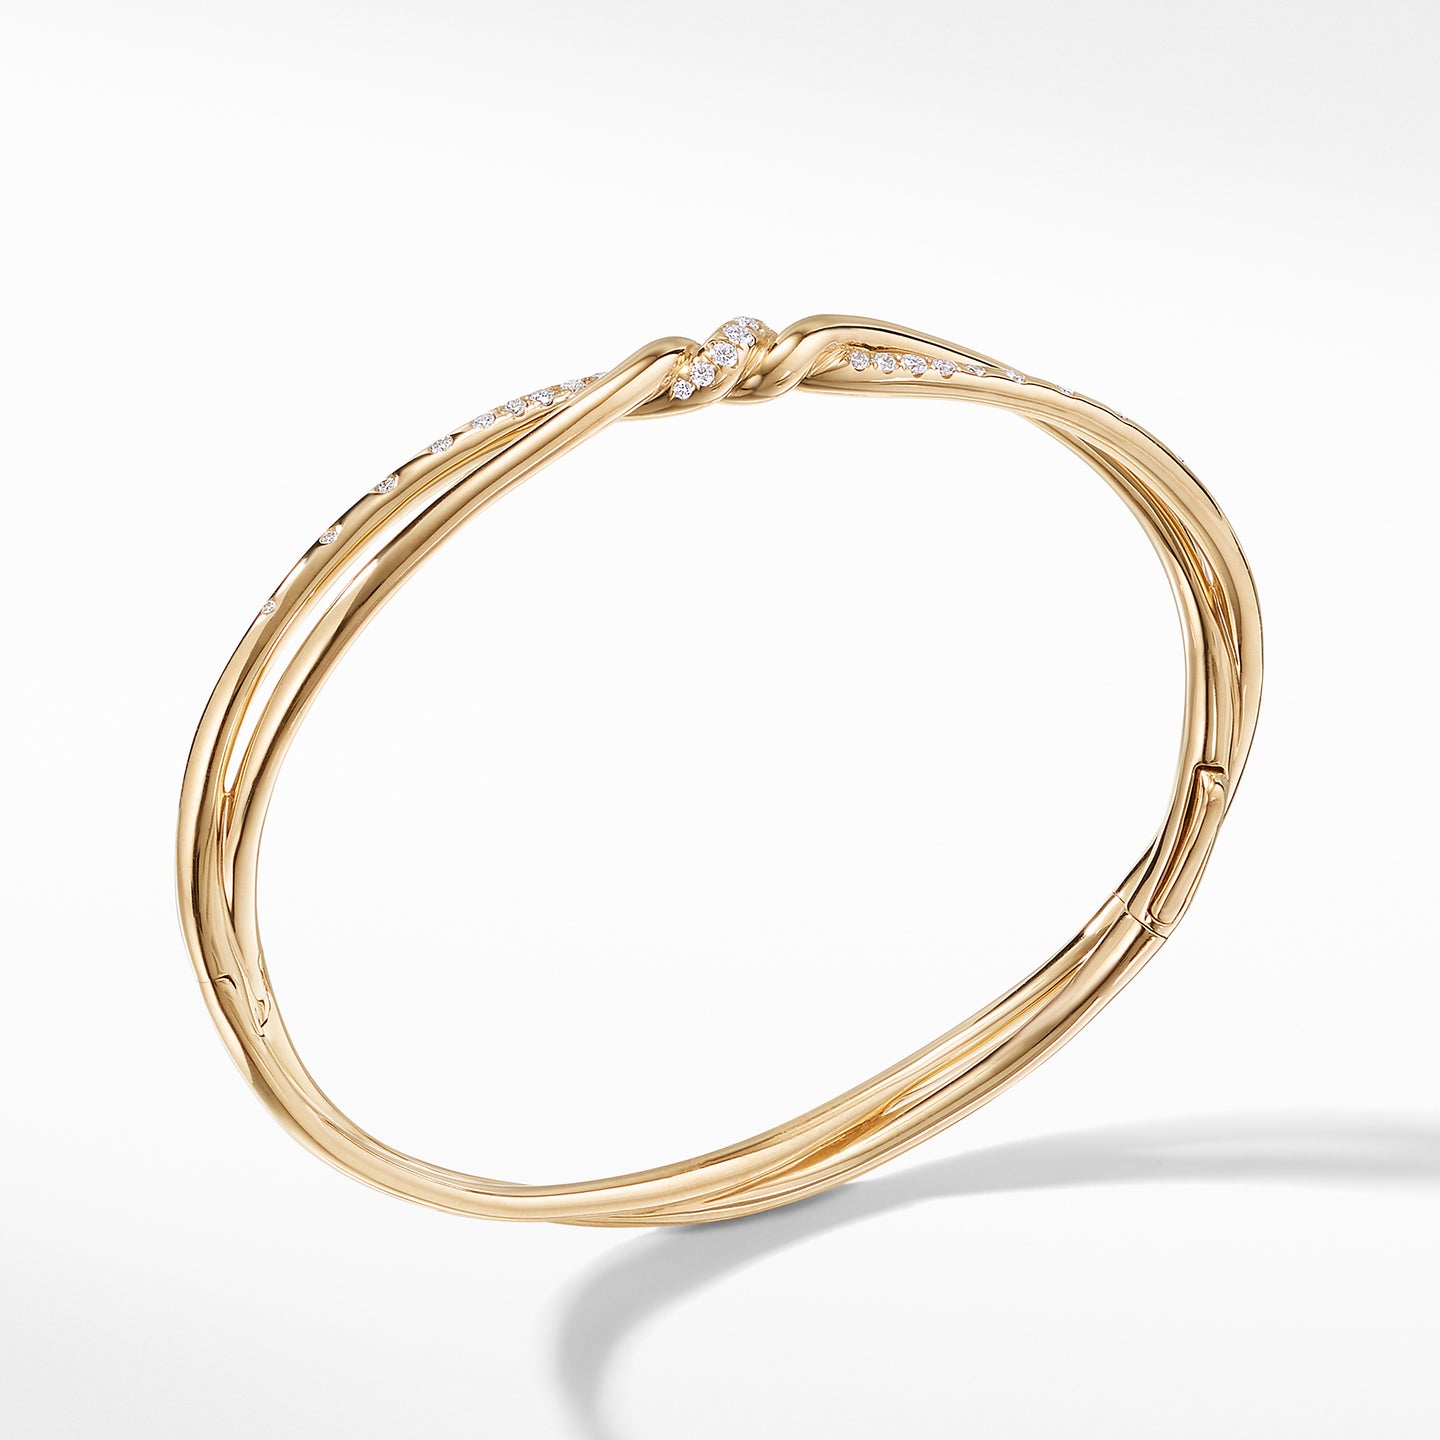 Continuance® Center Twist Bracelet with Diamonds in 18K Gold, Medium